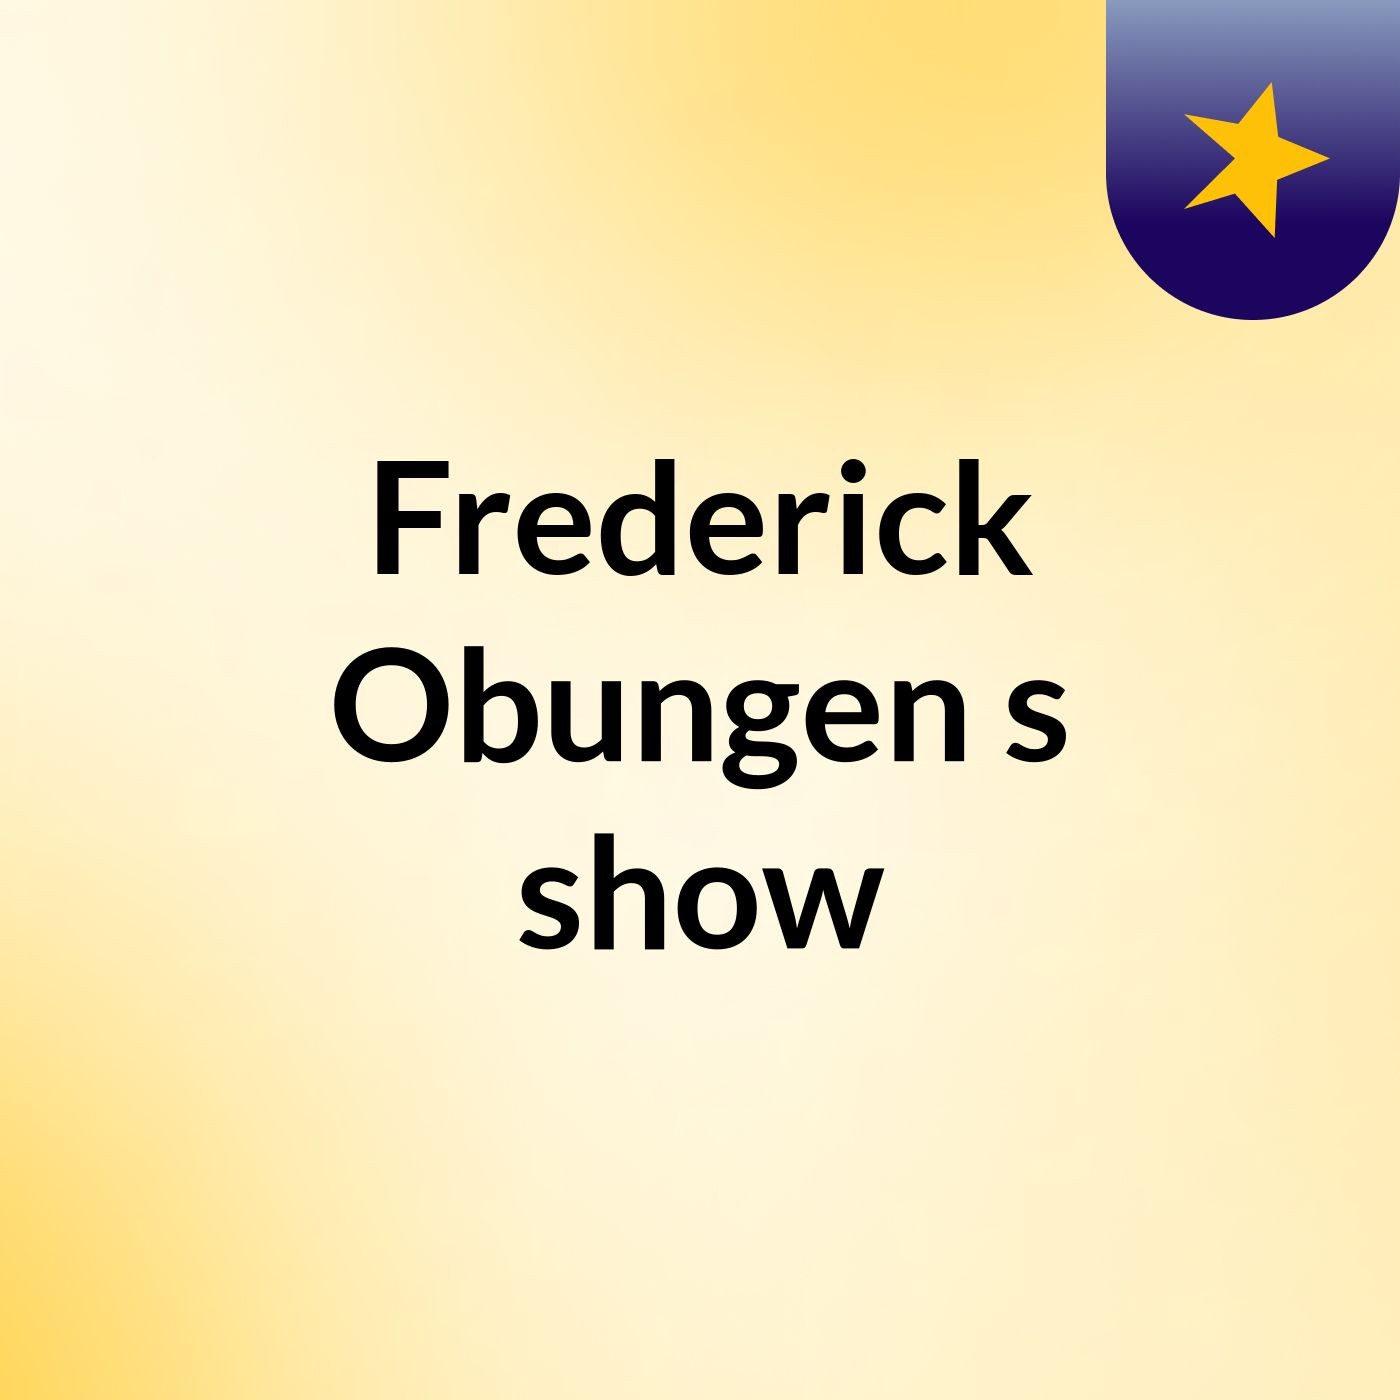 Frederick Obungen's show